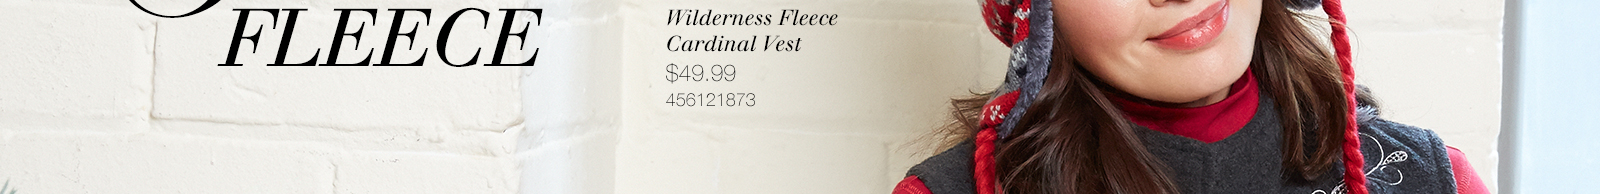 Wilderness Fleece Cardinal Vest